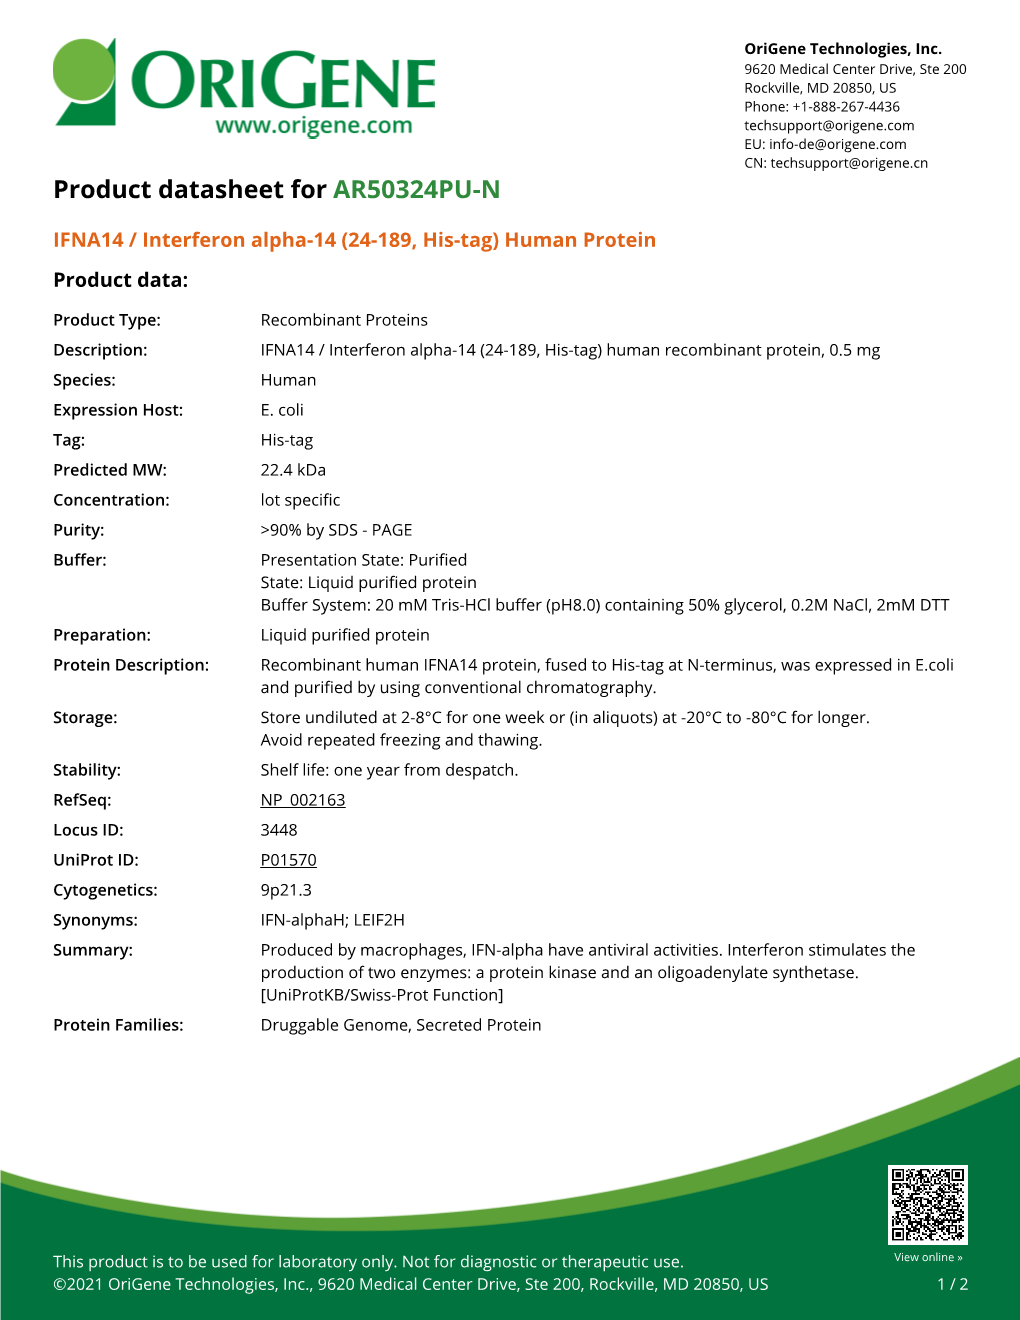 IFNA14 / Interferon Alpha-14 (24-189, His-Tag) Human Protein Product Data